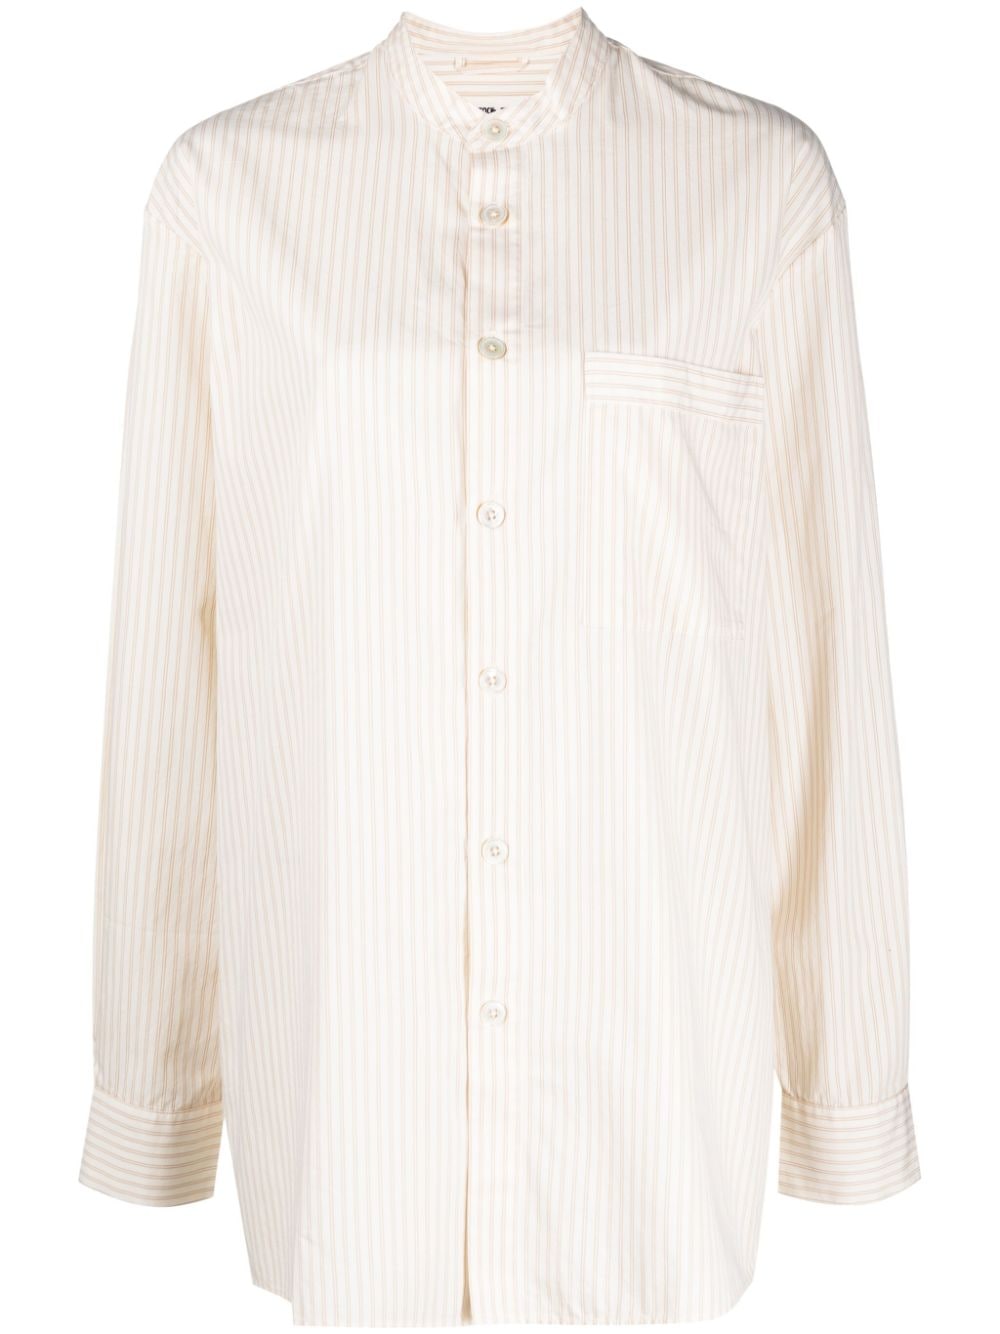 TEKLA X Birkenstock striped pyjama shirt - White von TEKLA